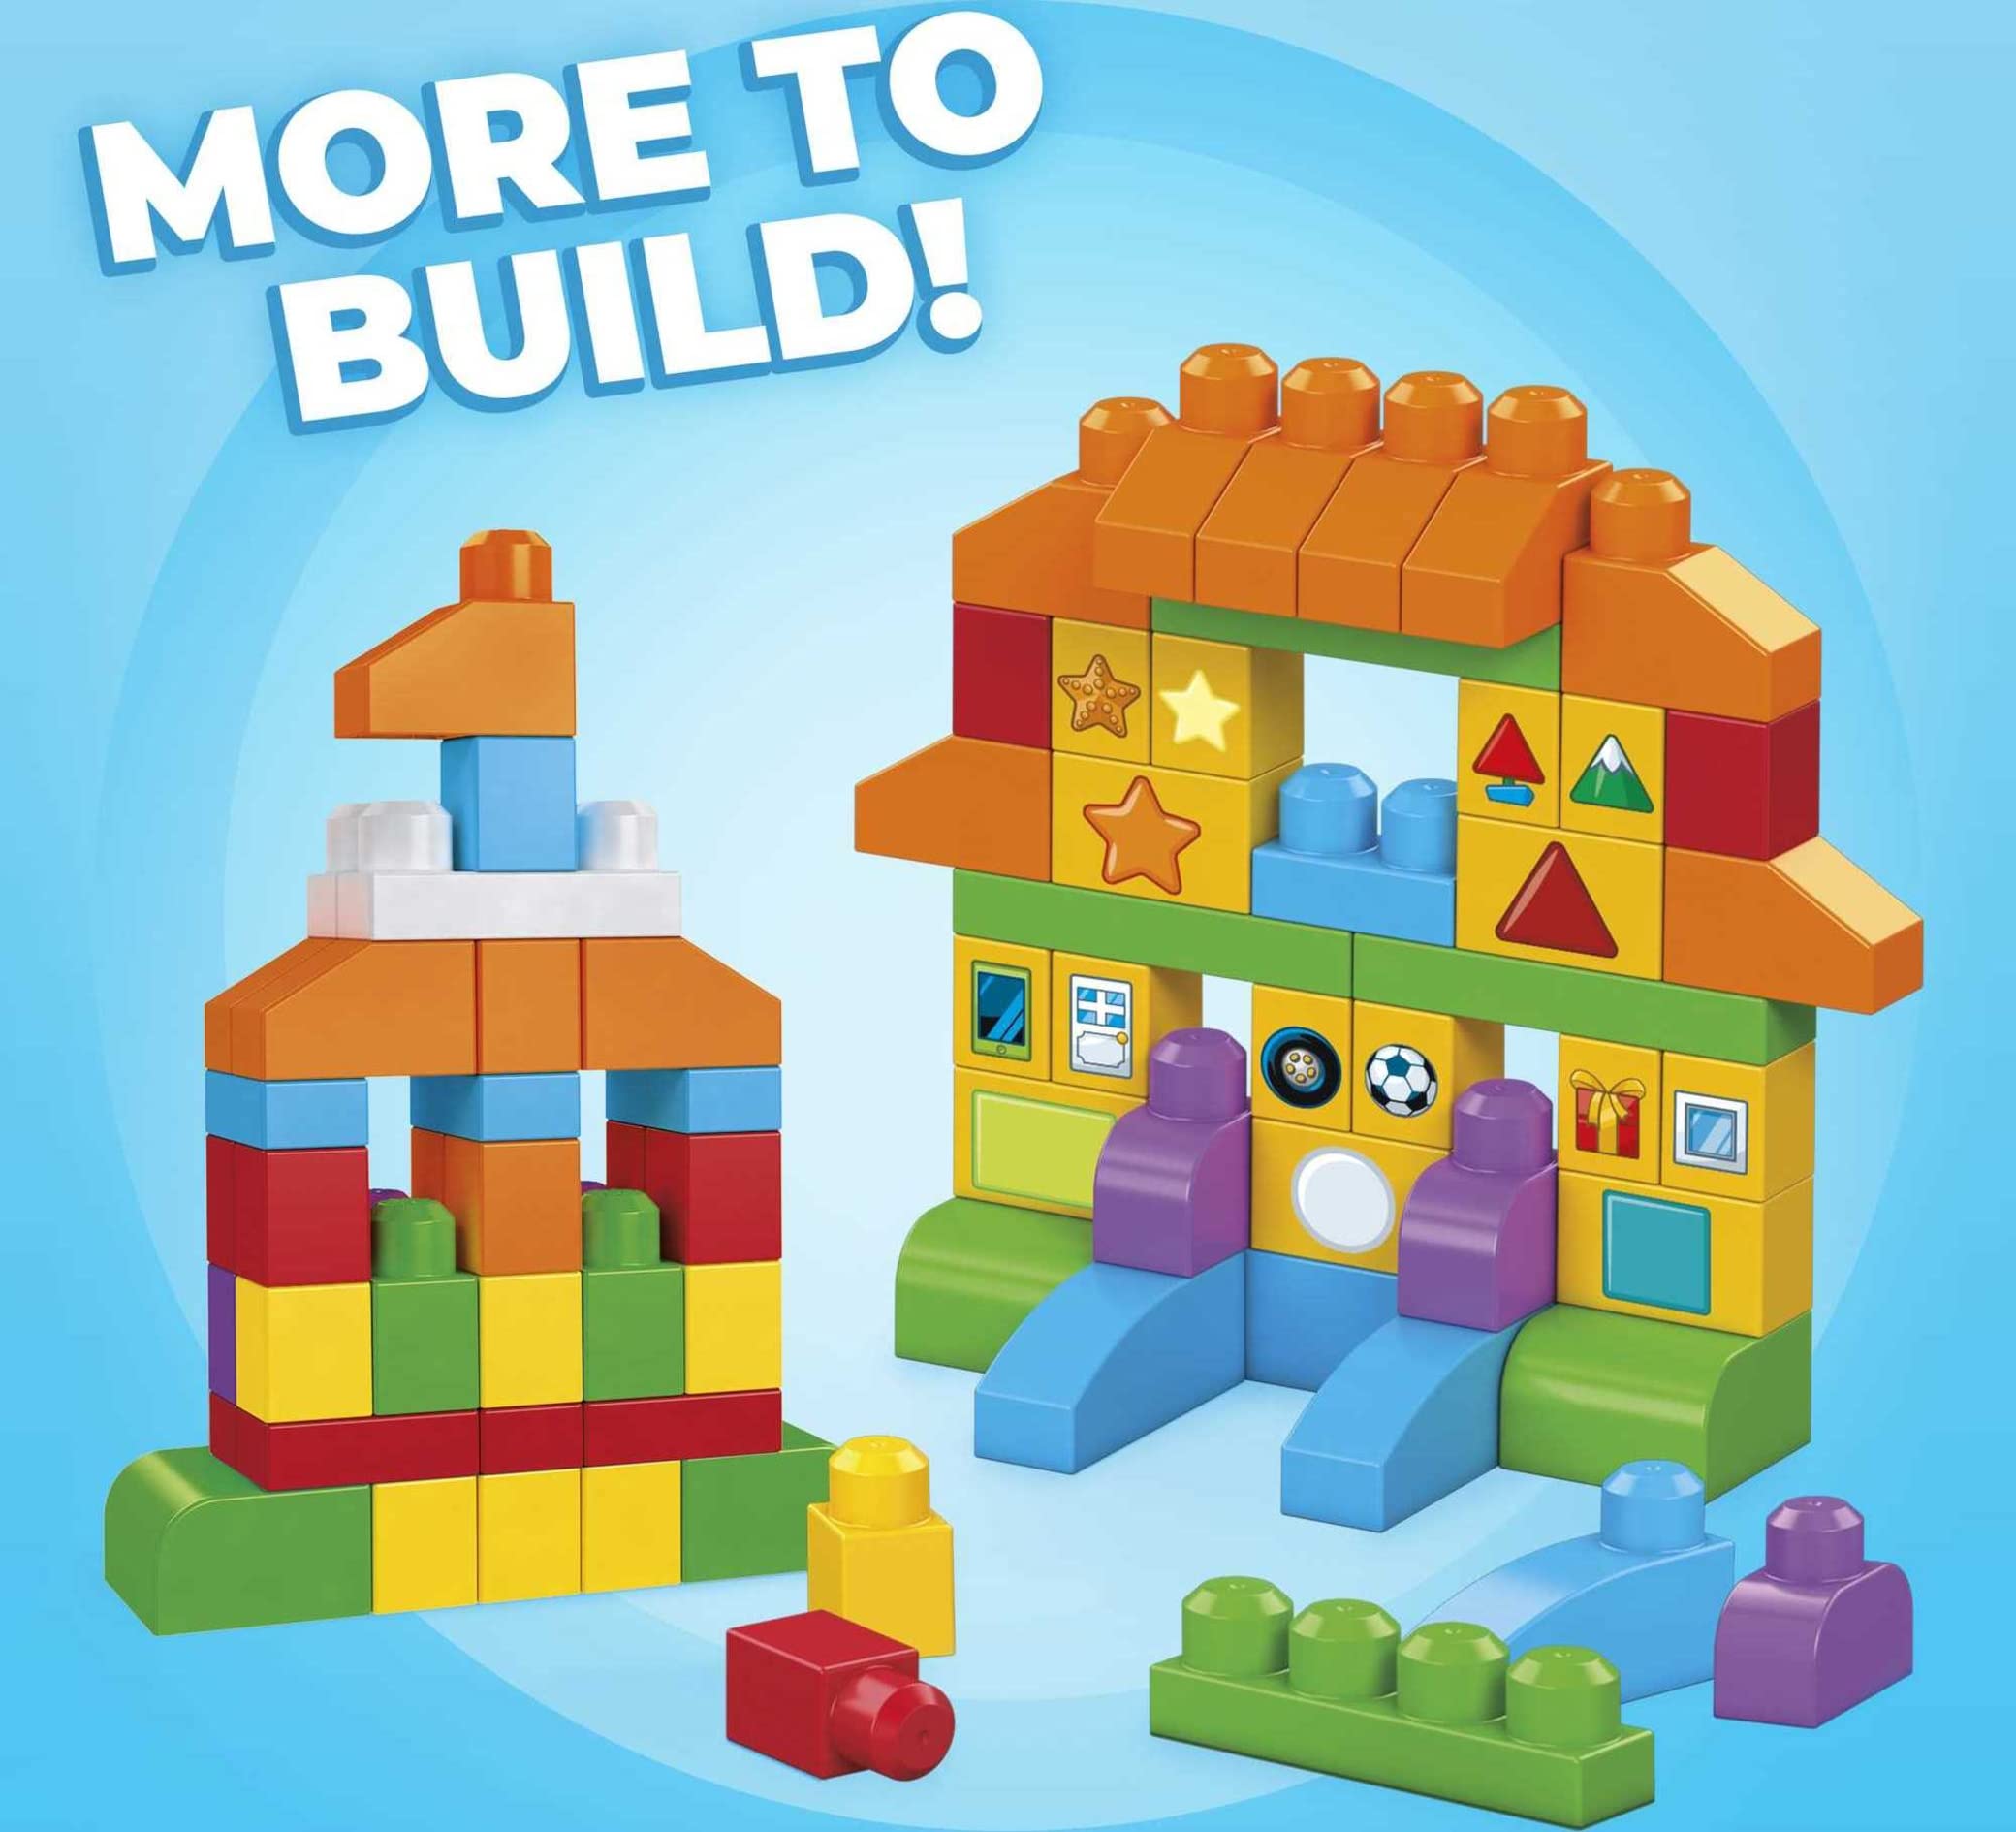 MEGA BLOKS 150 Toddlers Blocks Learning Toy Building Set, Let's Get Learning! For Toddlers 1-3